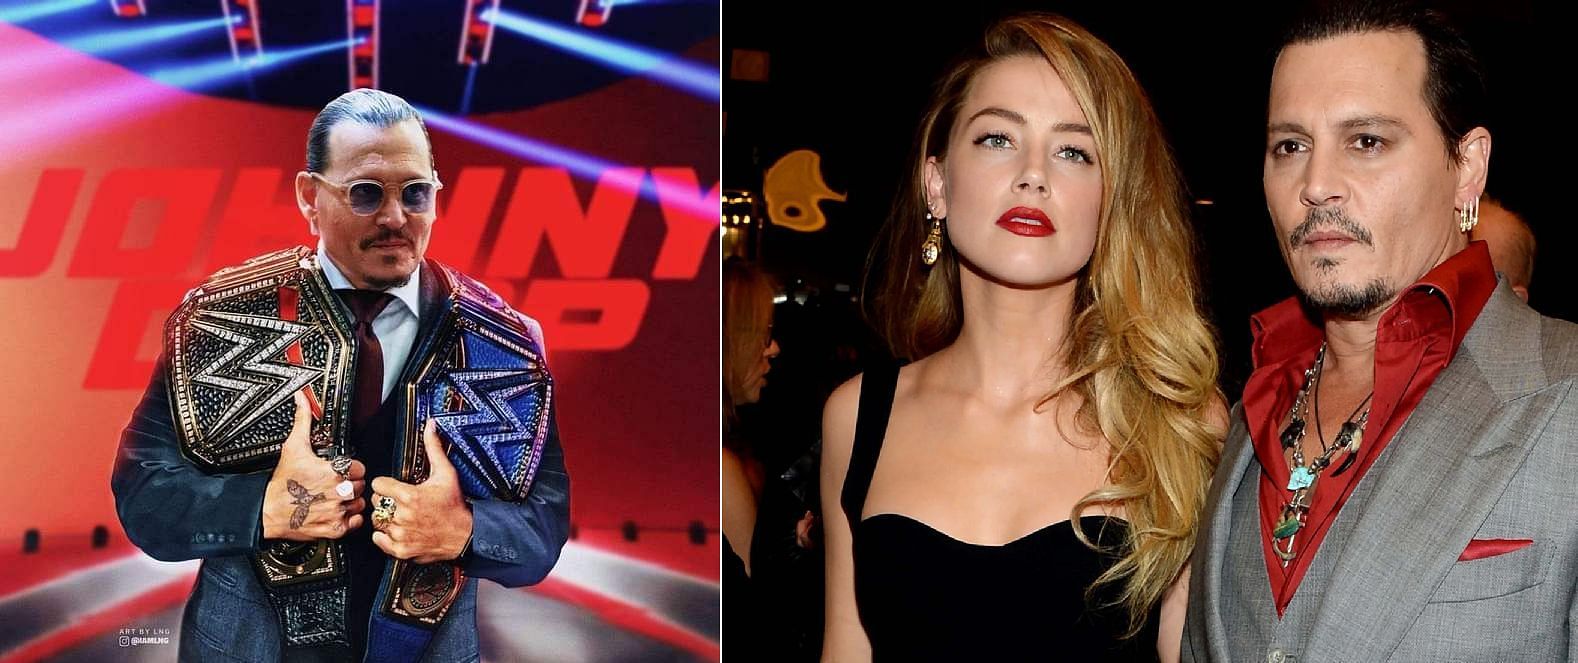 Johnny Depp won his case against ex-wife Amber Heard